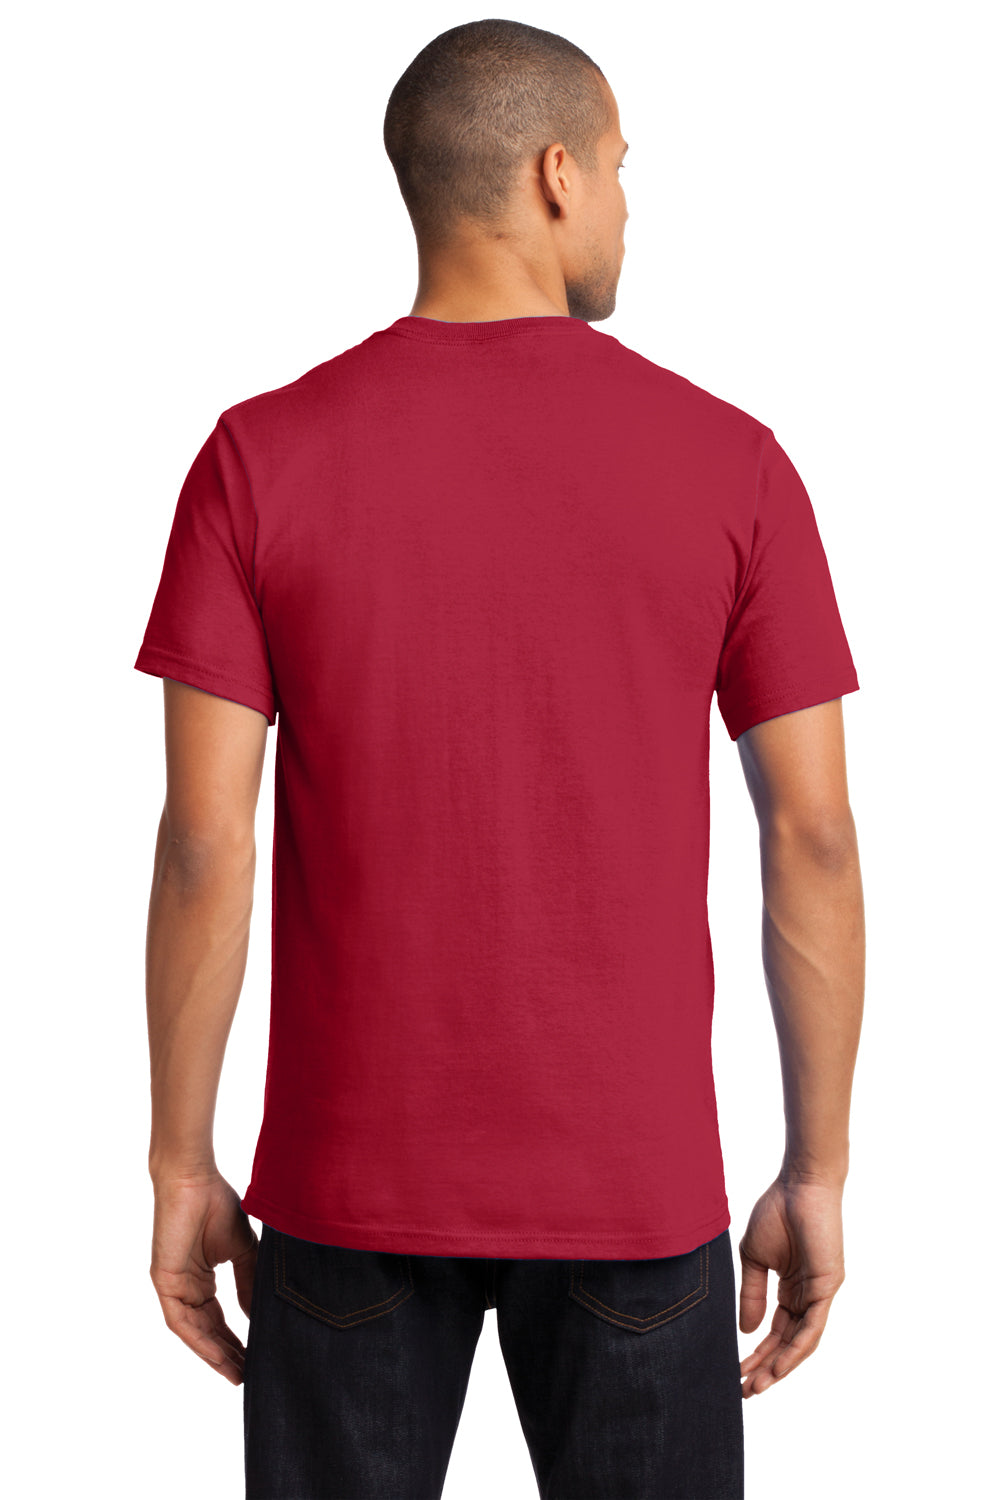 Port & Company PC61P Mens Essential Short Sleeve Crewneck T-Shirt w/ Pocket Red Back